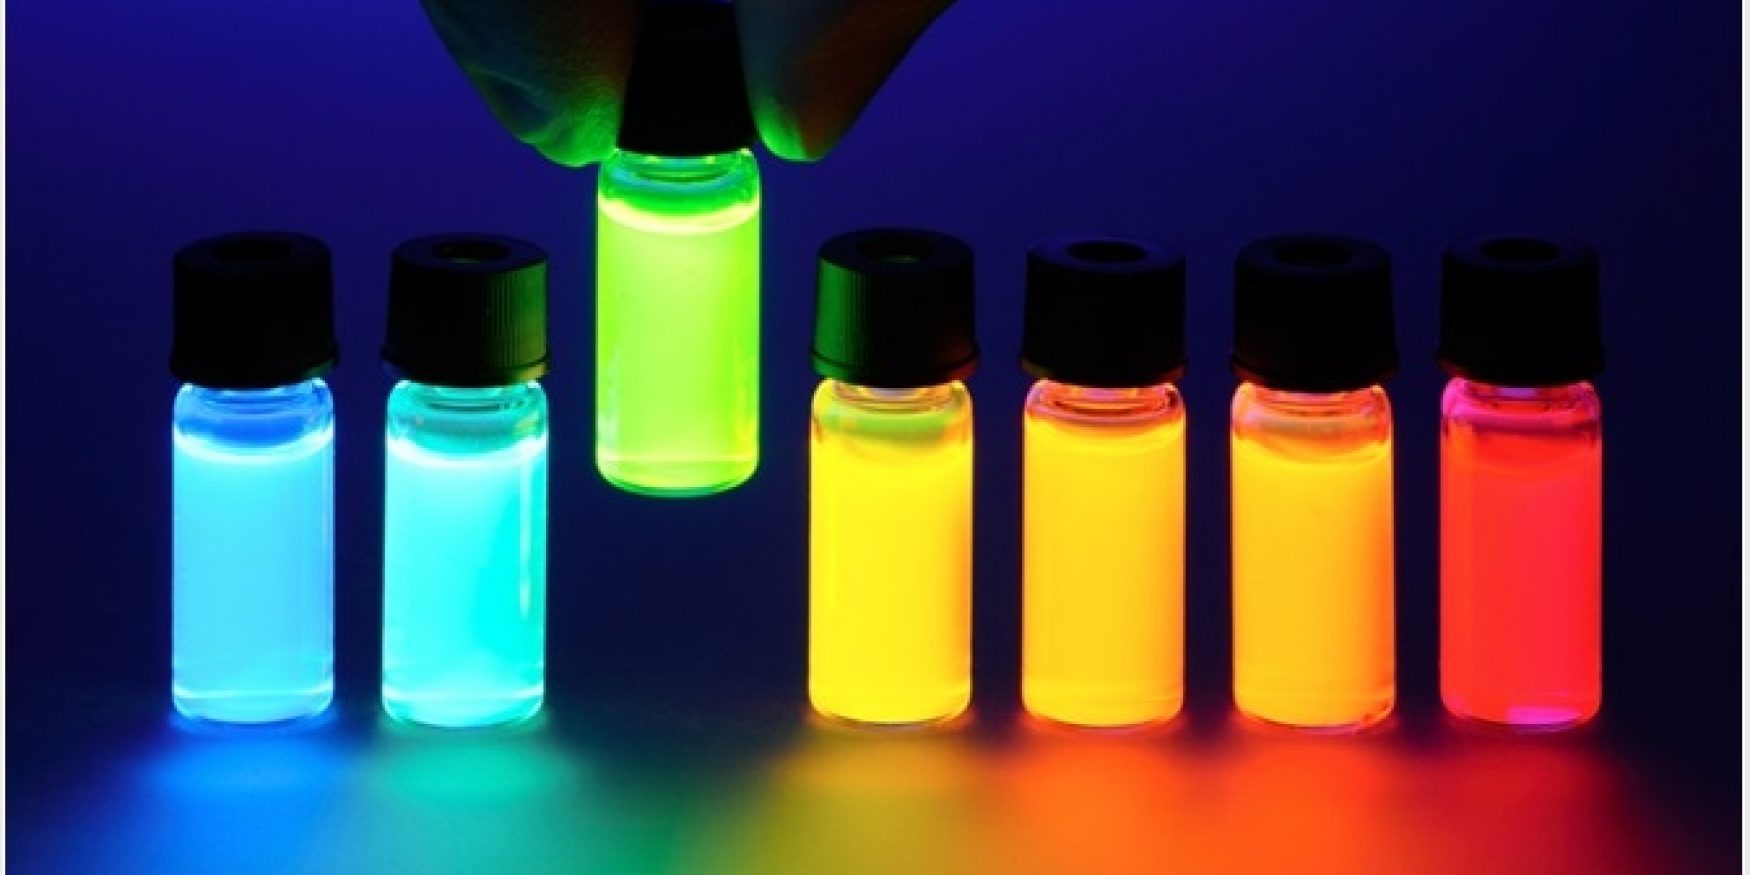 Phosphorescence and fluorescence - Materia Nova